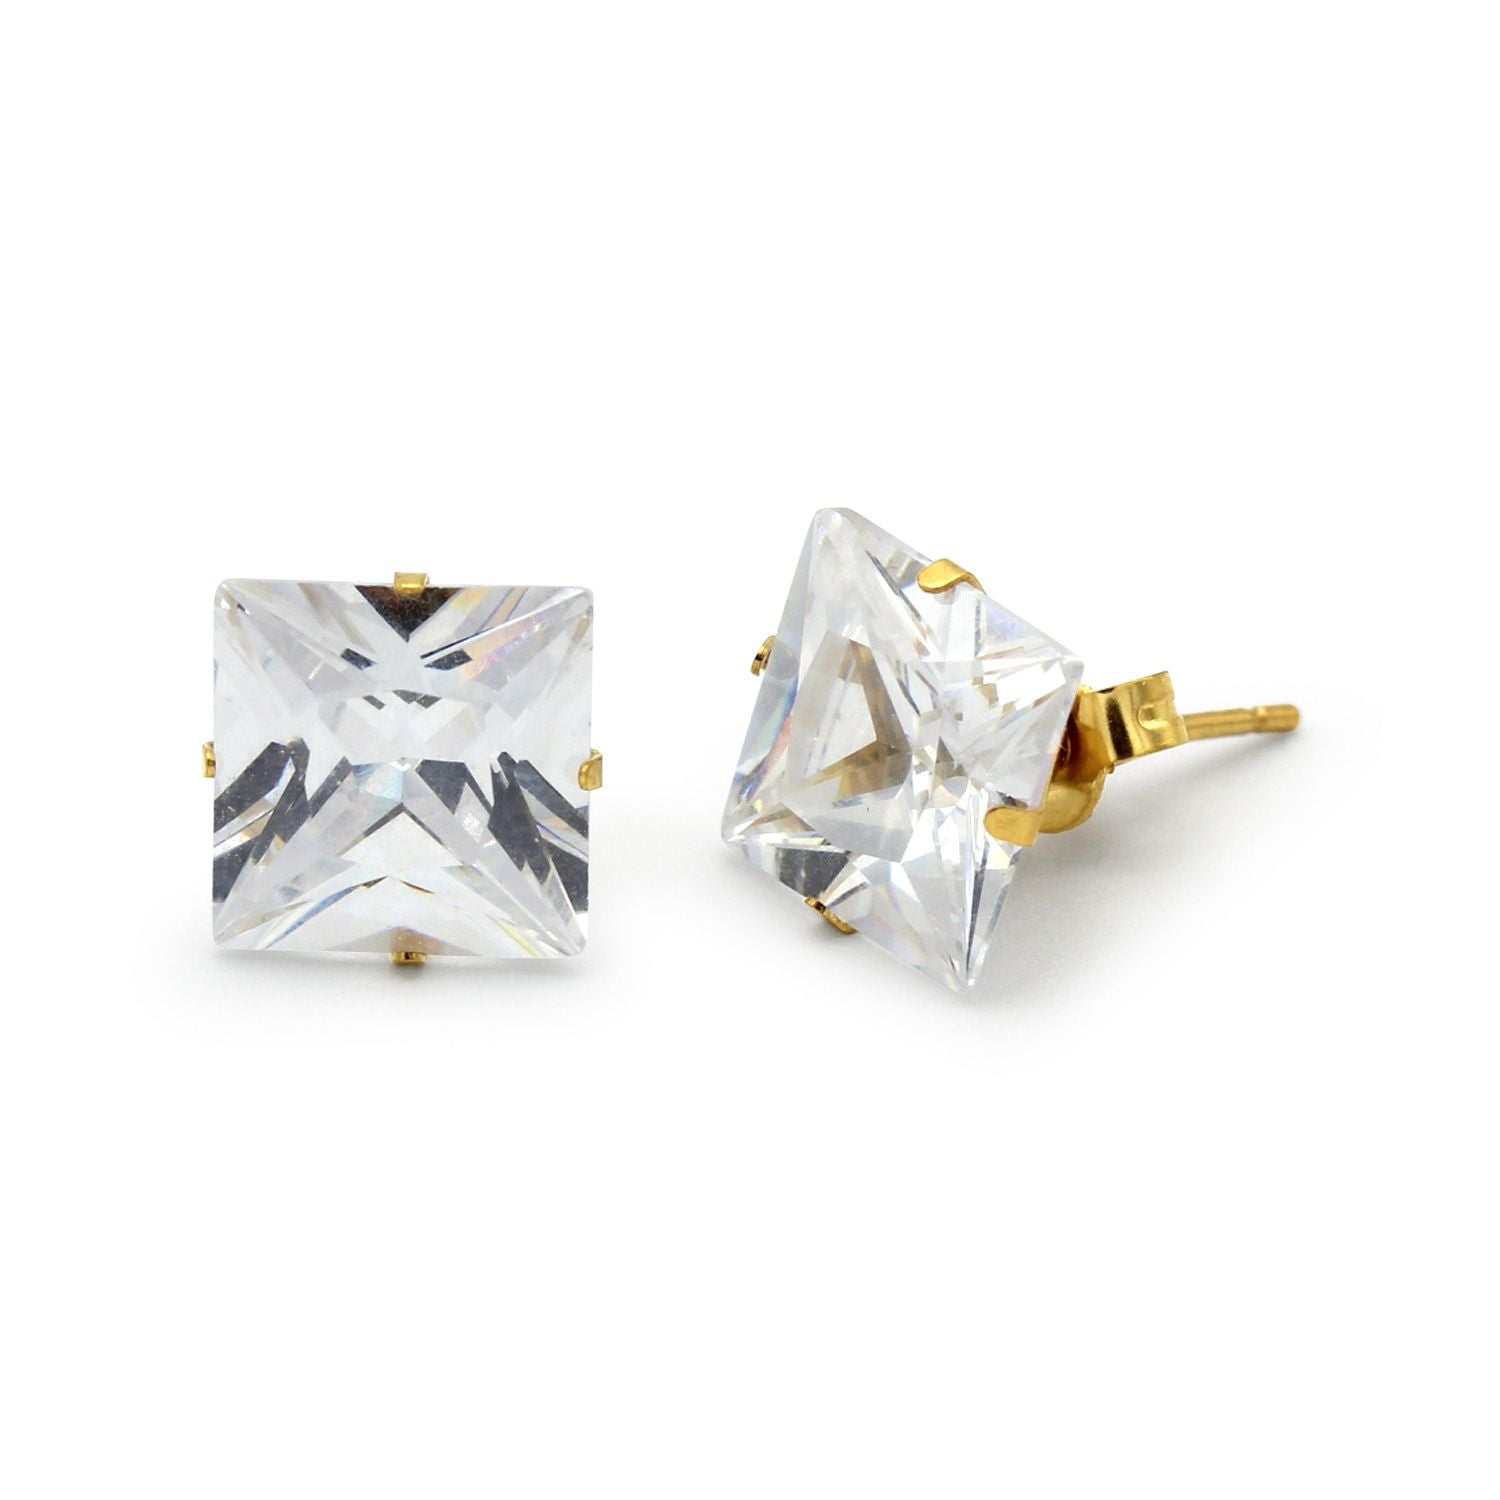 Cubic Zirconia Square 14K Gold Filled Stud Earrings Stainless Steel Jewelry Men Women